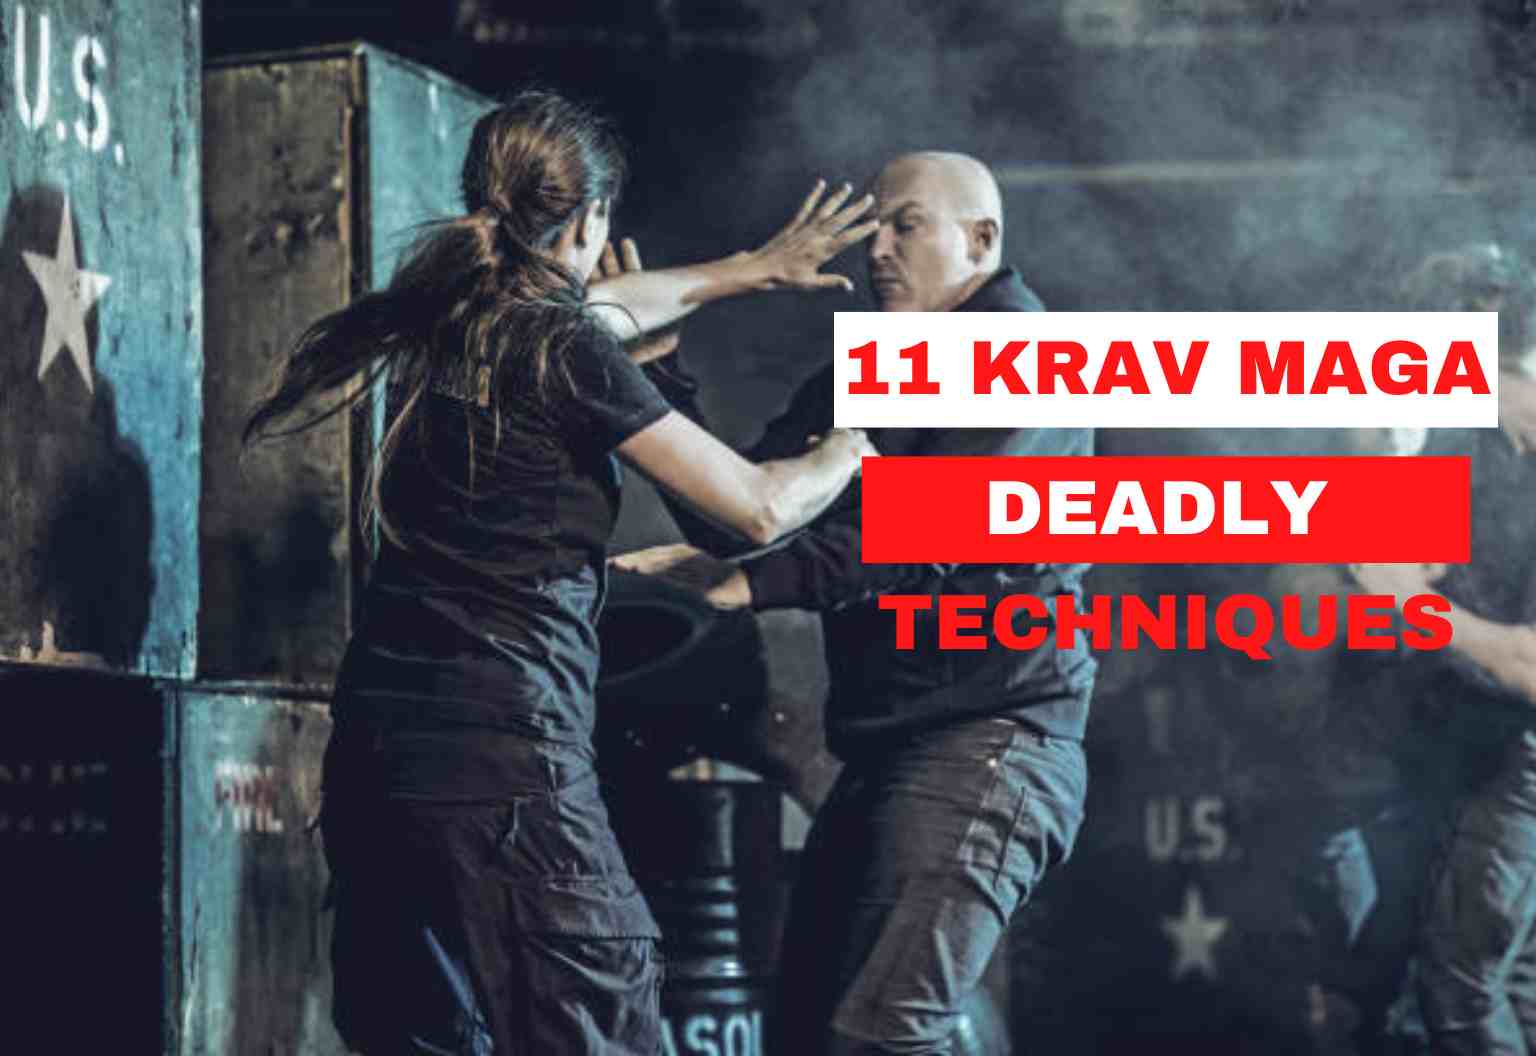 11 Krav Maga Deadly Techniques To Beat Anyone